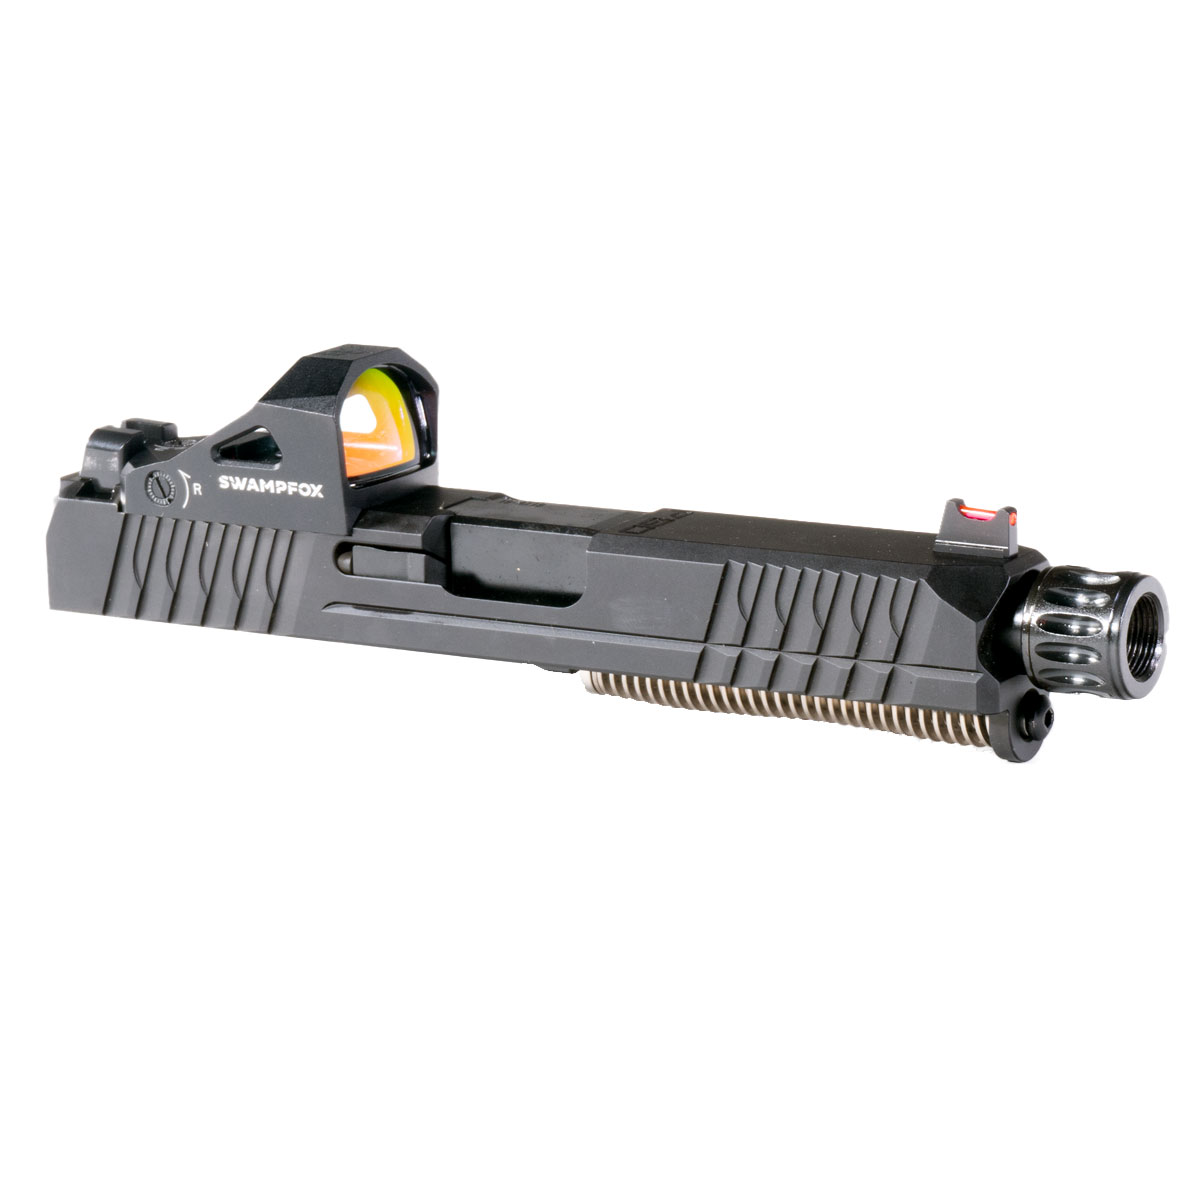 DD 'Pouli w/ Swampfox Justice RMR' 9mm Complete Slide Kit - Glock 19 Gen 1-3 Compatible